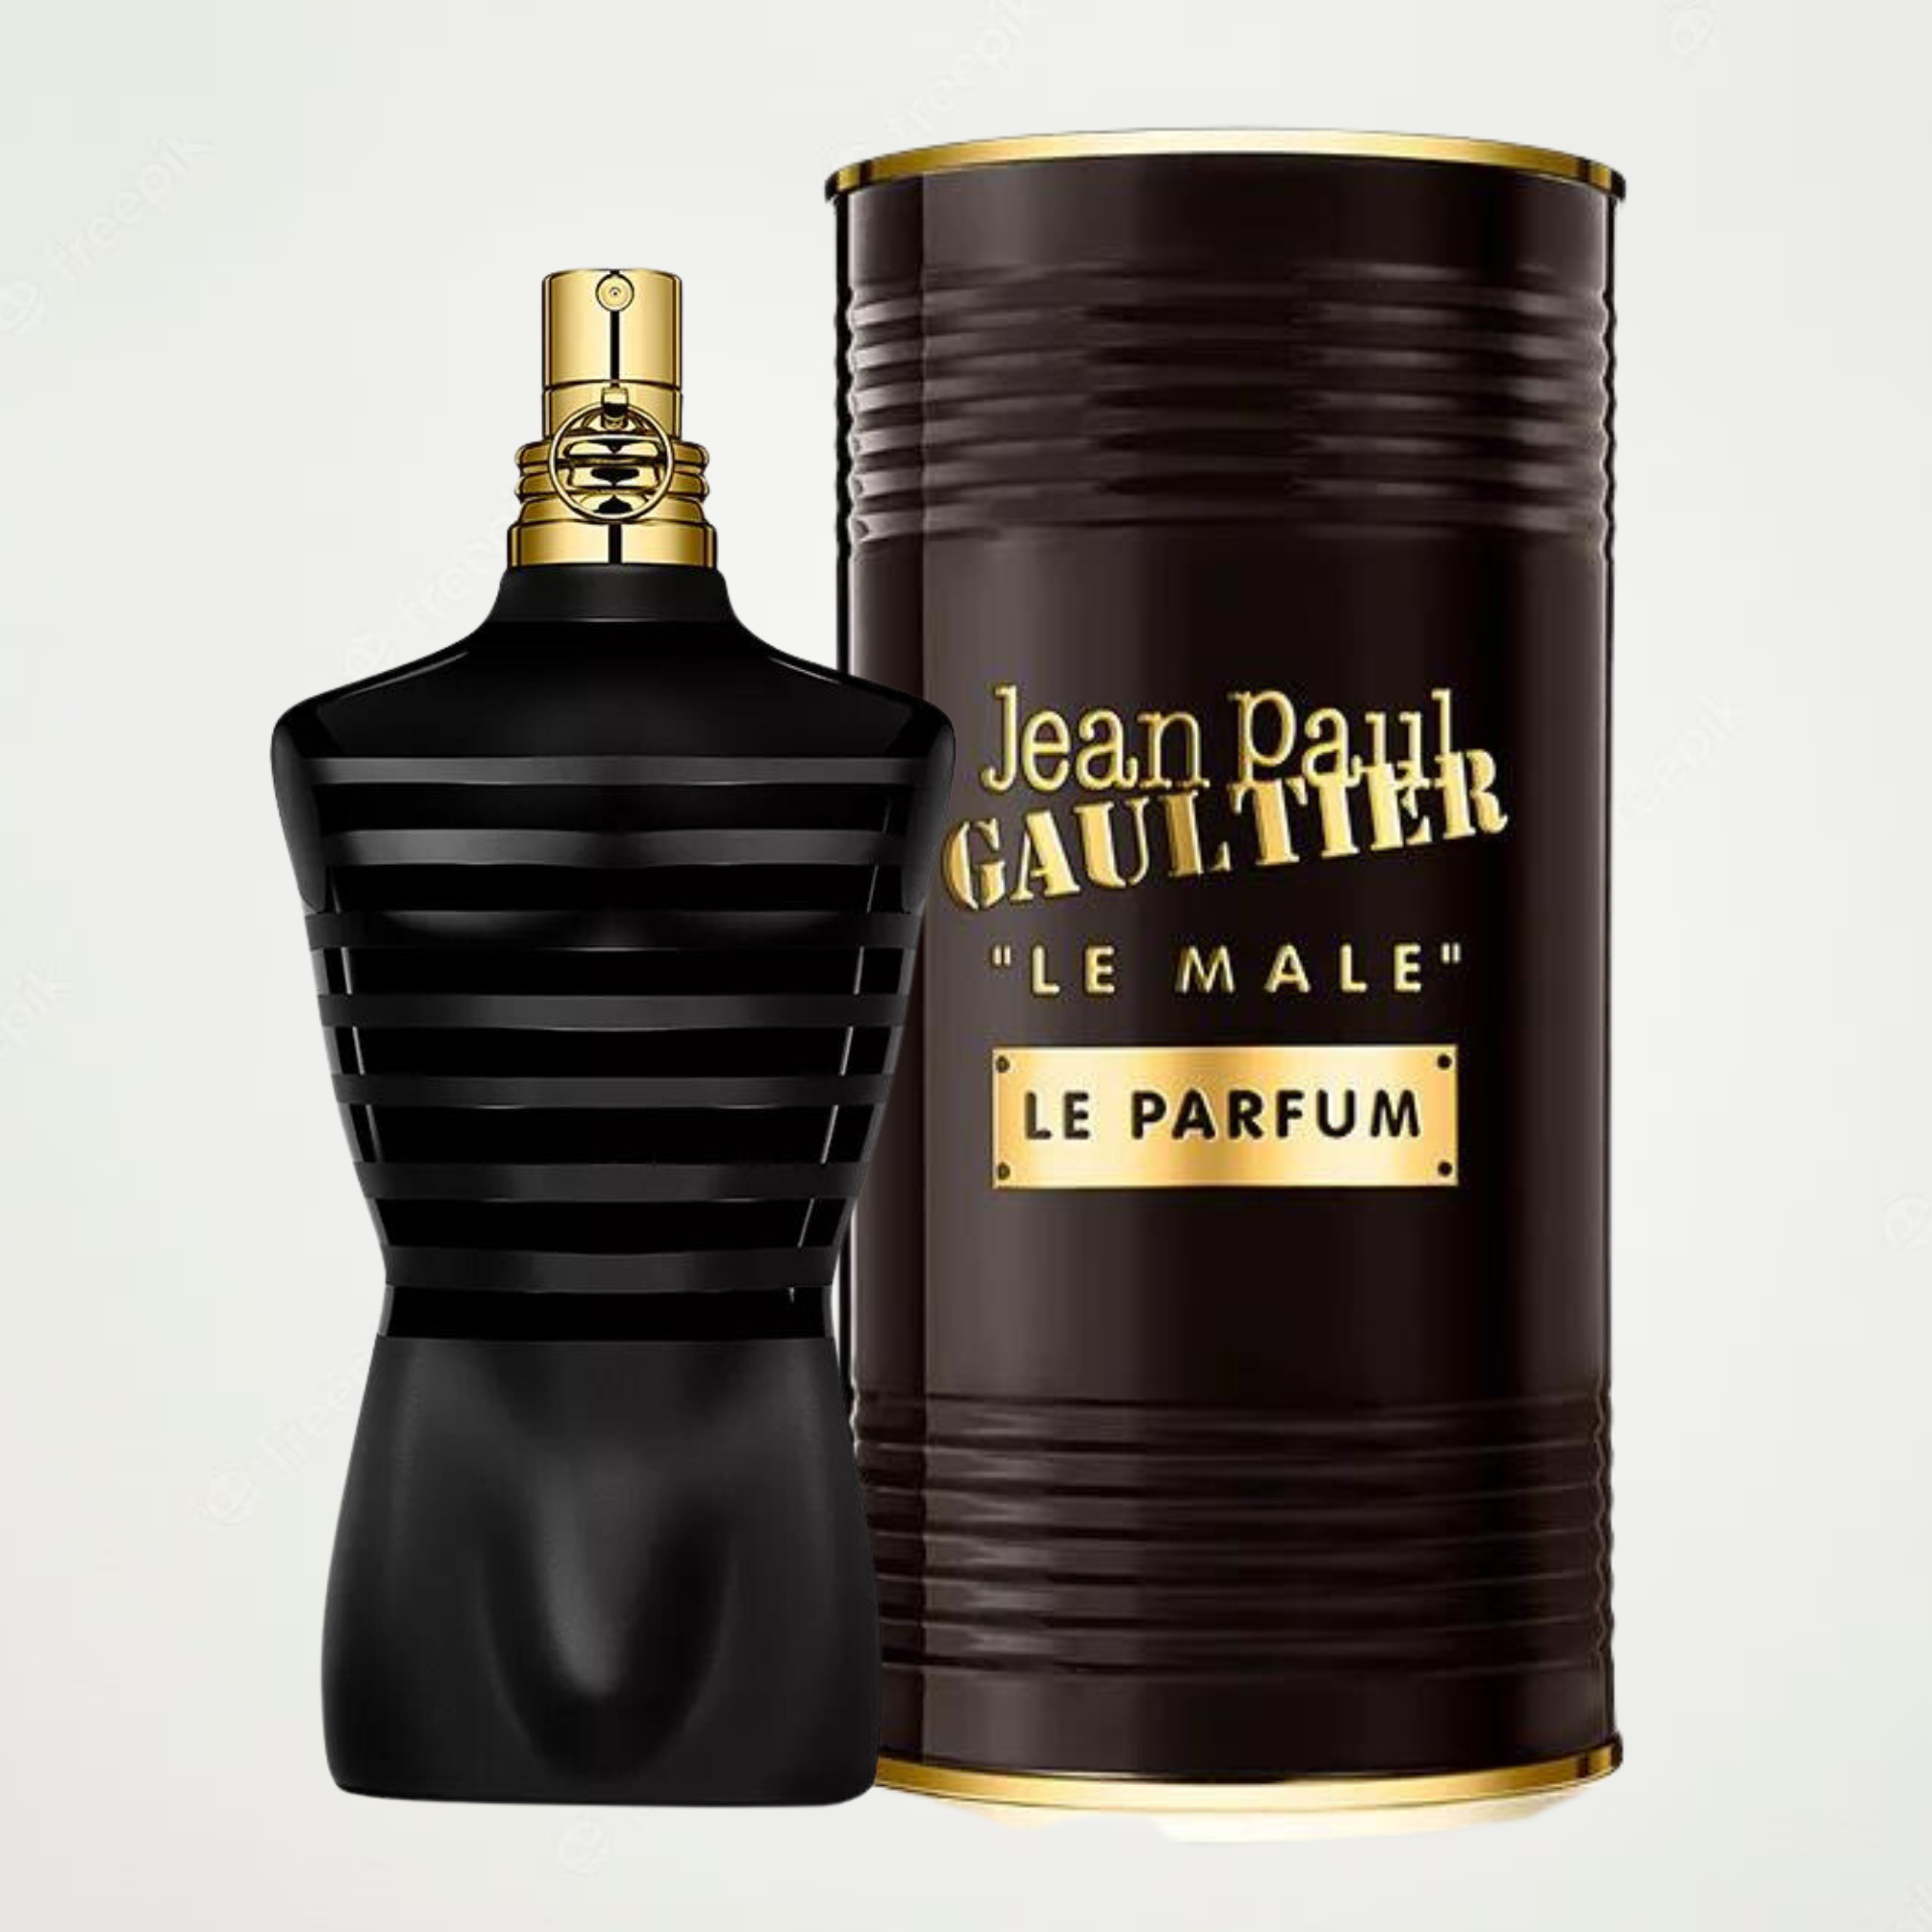 Jean Paul Gaultier ultra male vs Jean Paul Gaultier le male le parfum